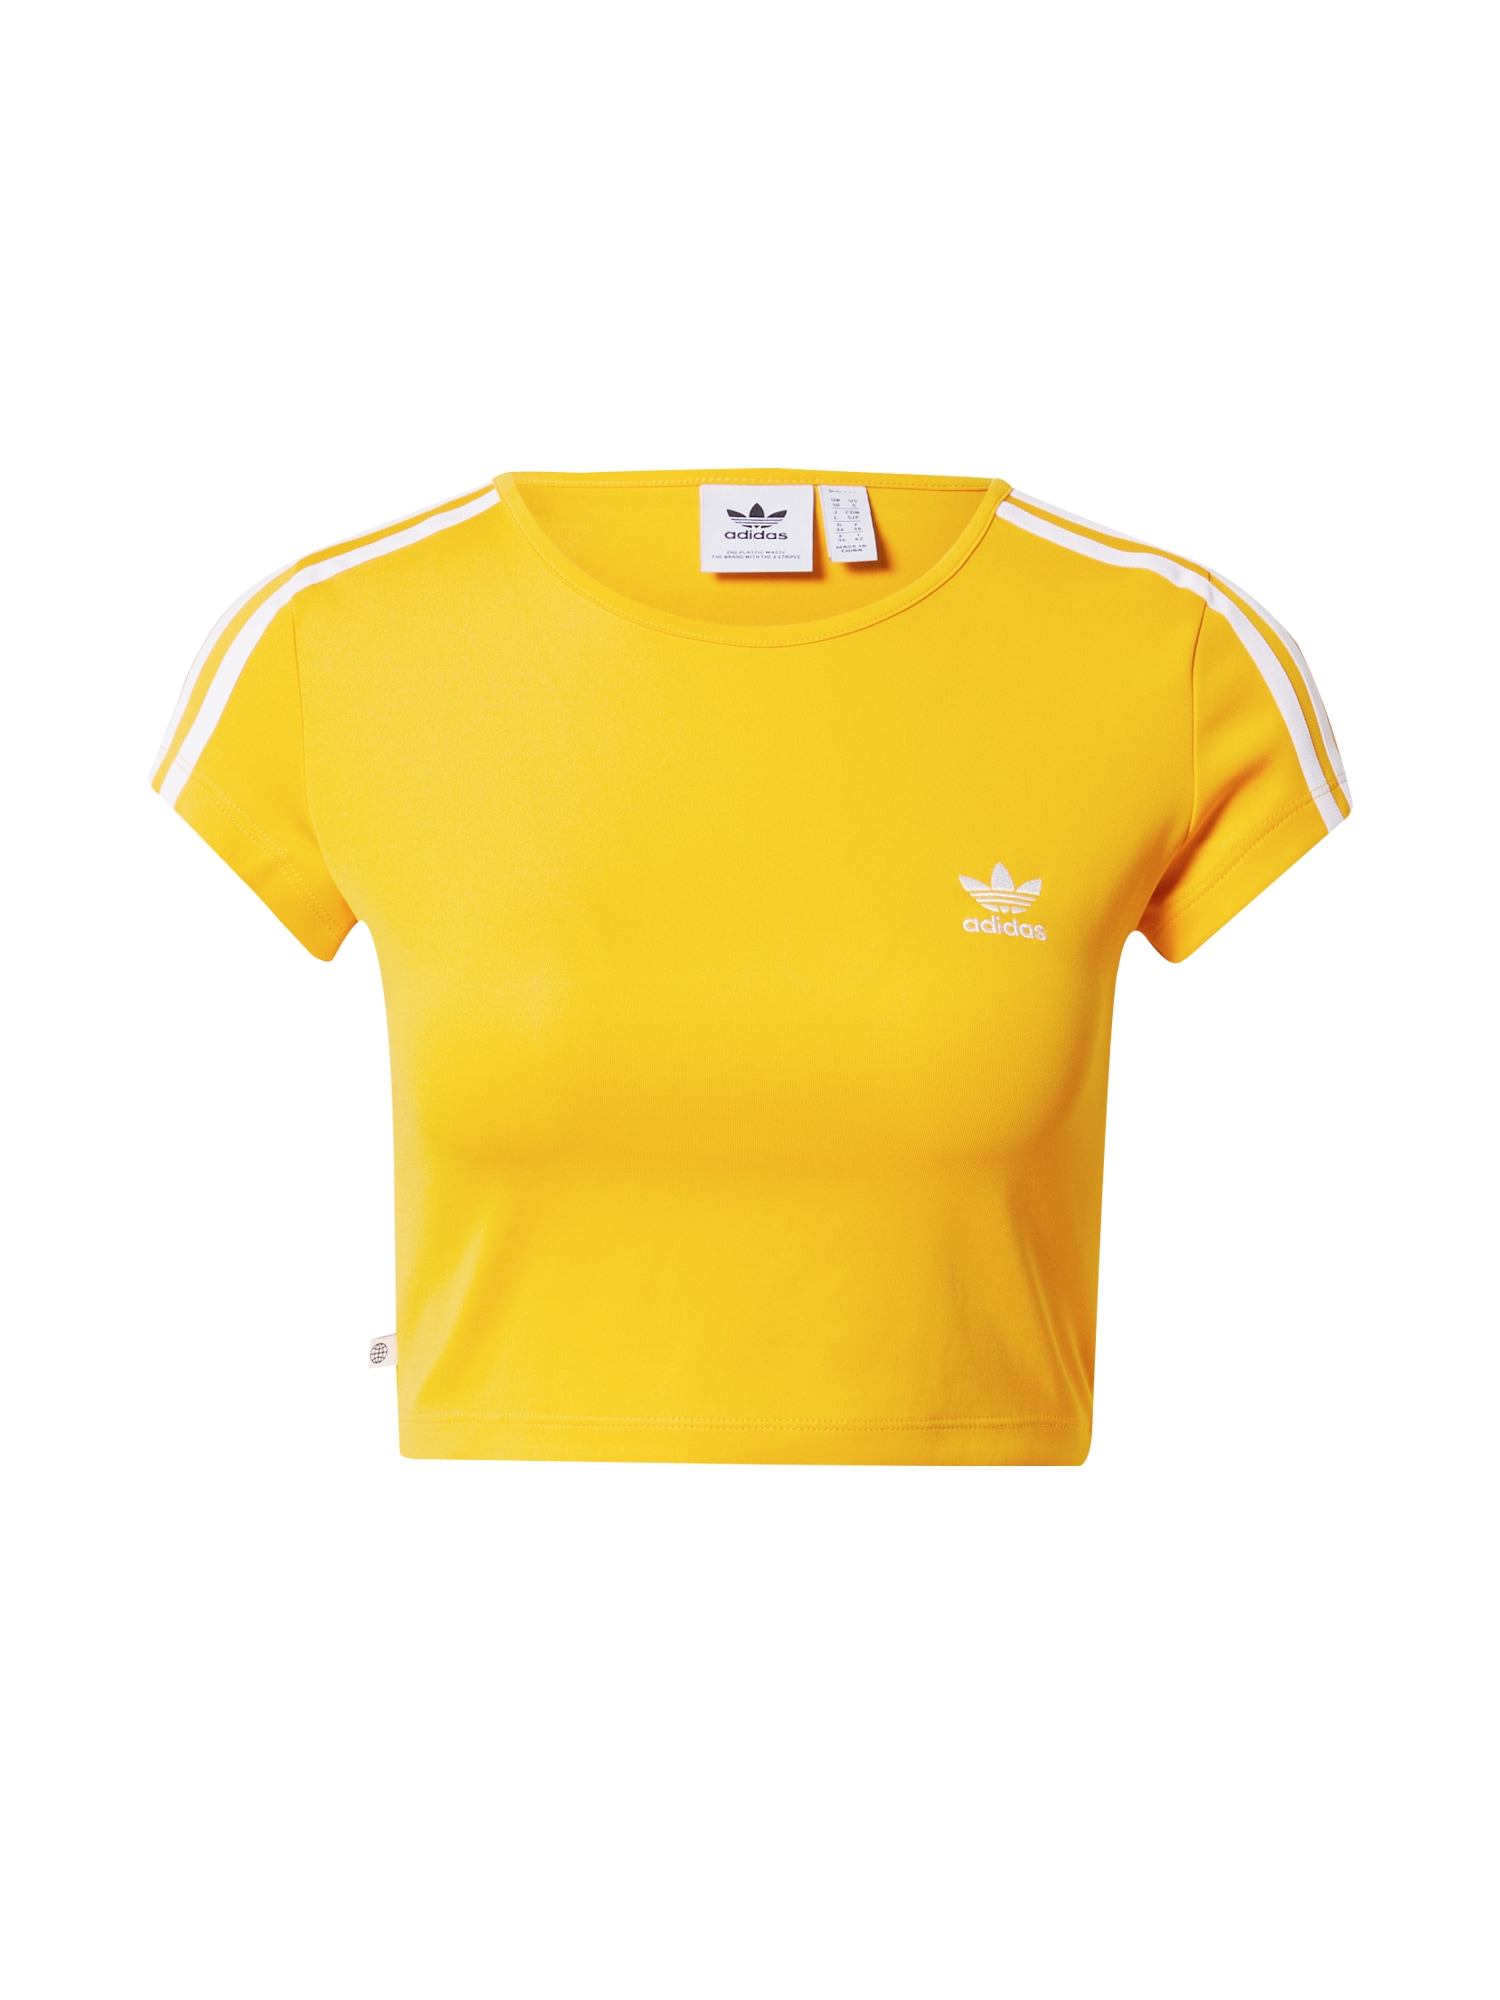 adidas Originals ADIDAS ORIGINALS T-Shirt gelb / weiß